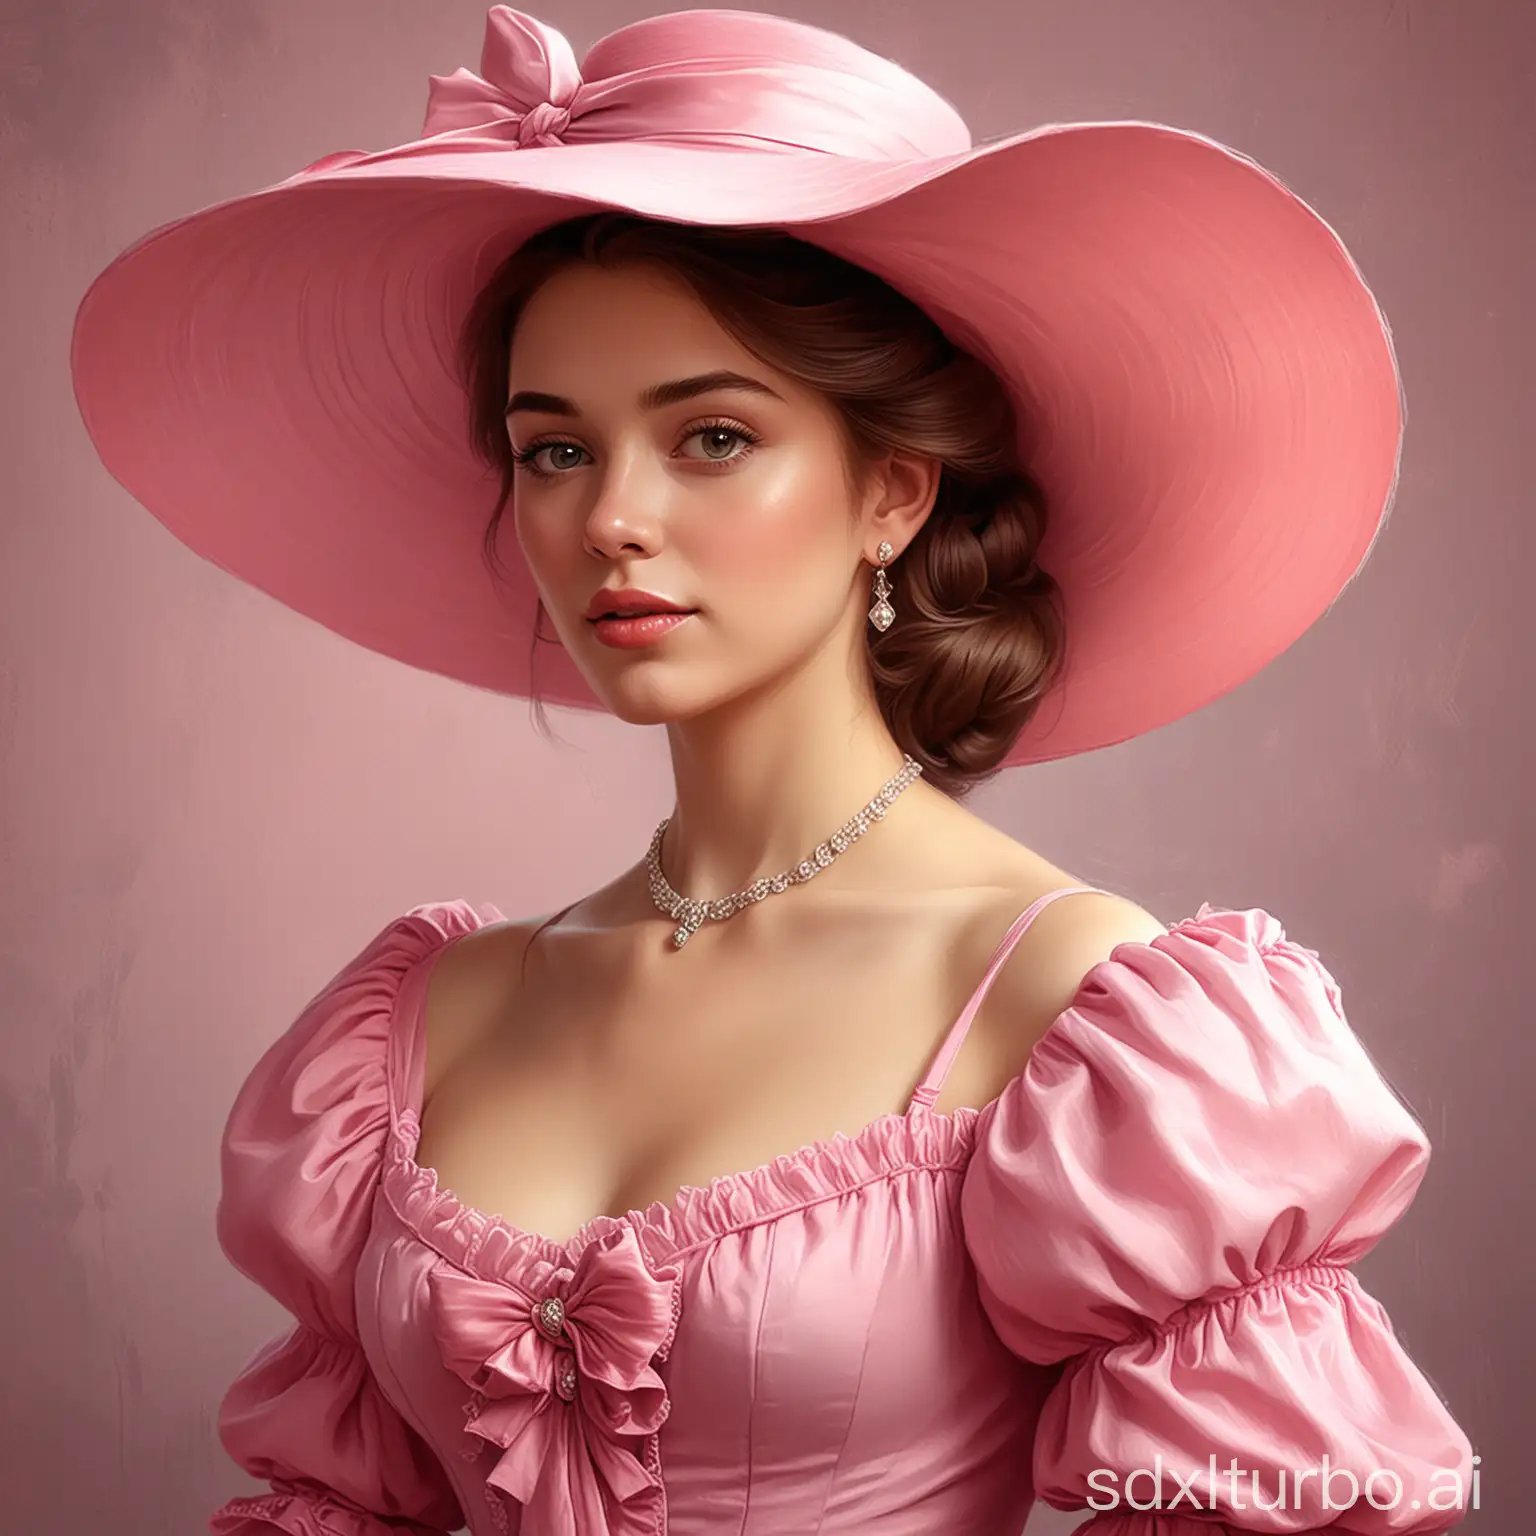 Elegant-Victorian-Lady-in-Pink-Hat-and-Dress-Beautiful-Digital-Illustration